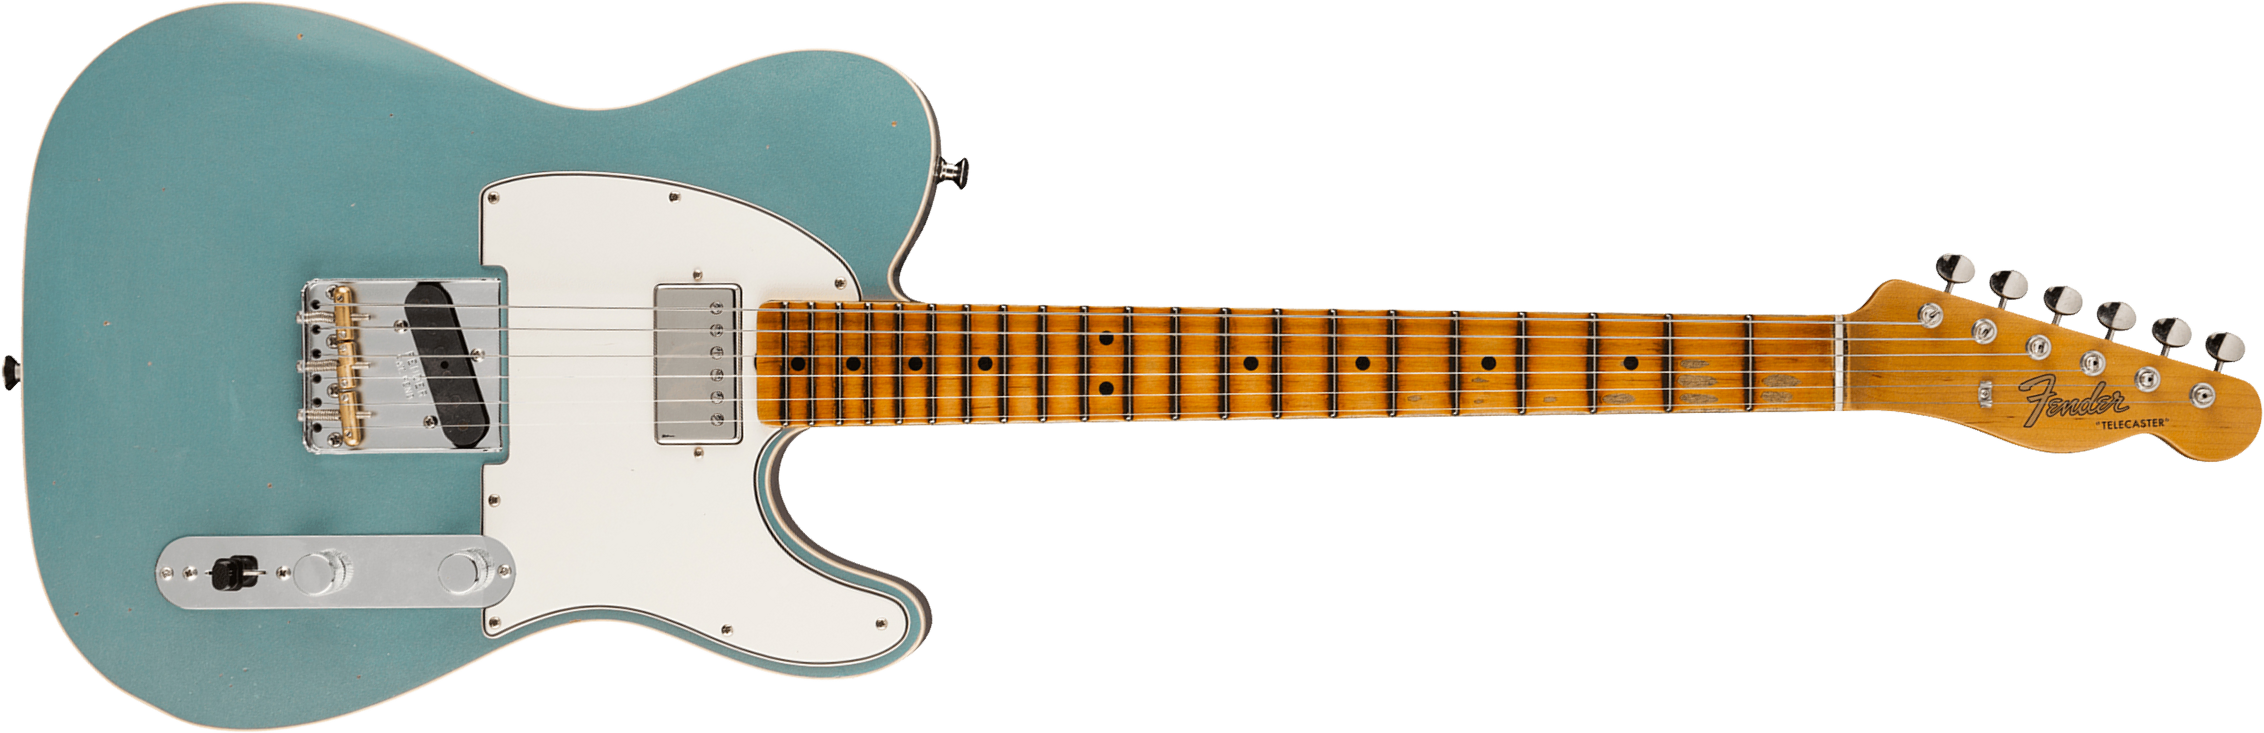 Fender Custom Shop Tele Postmodern Usa Sh Ht Mn - Journeyman Relic Firemist Silver - Guitare Électrique Forme Tel - Main picture